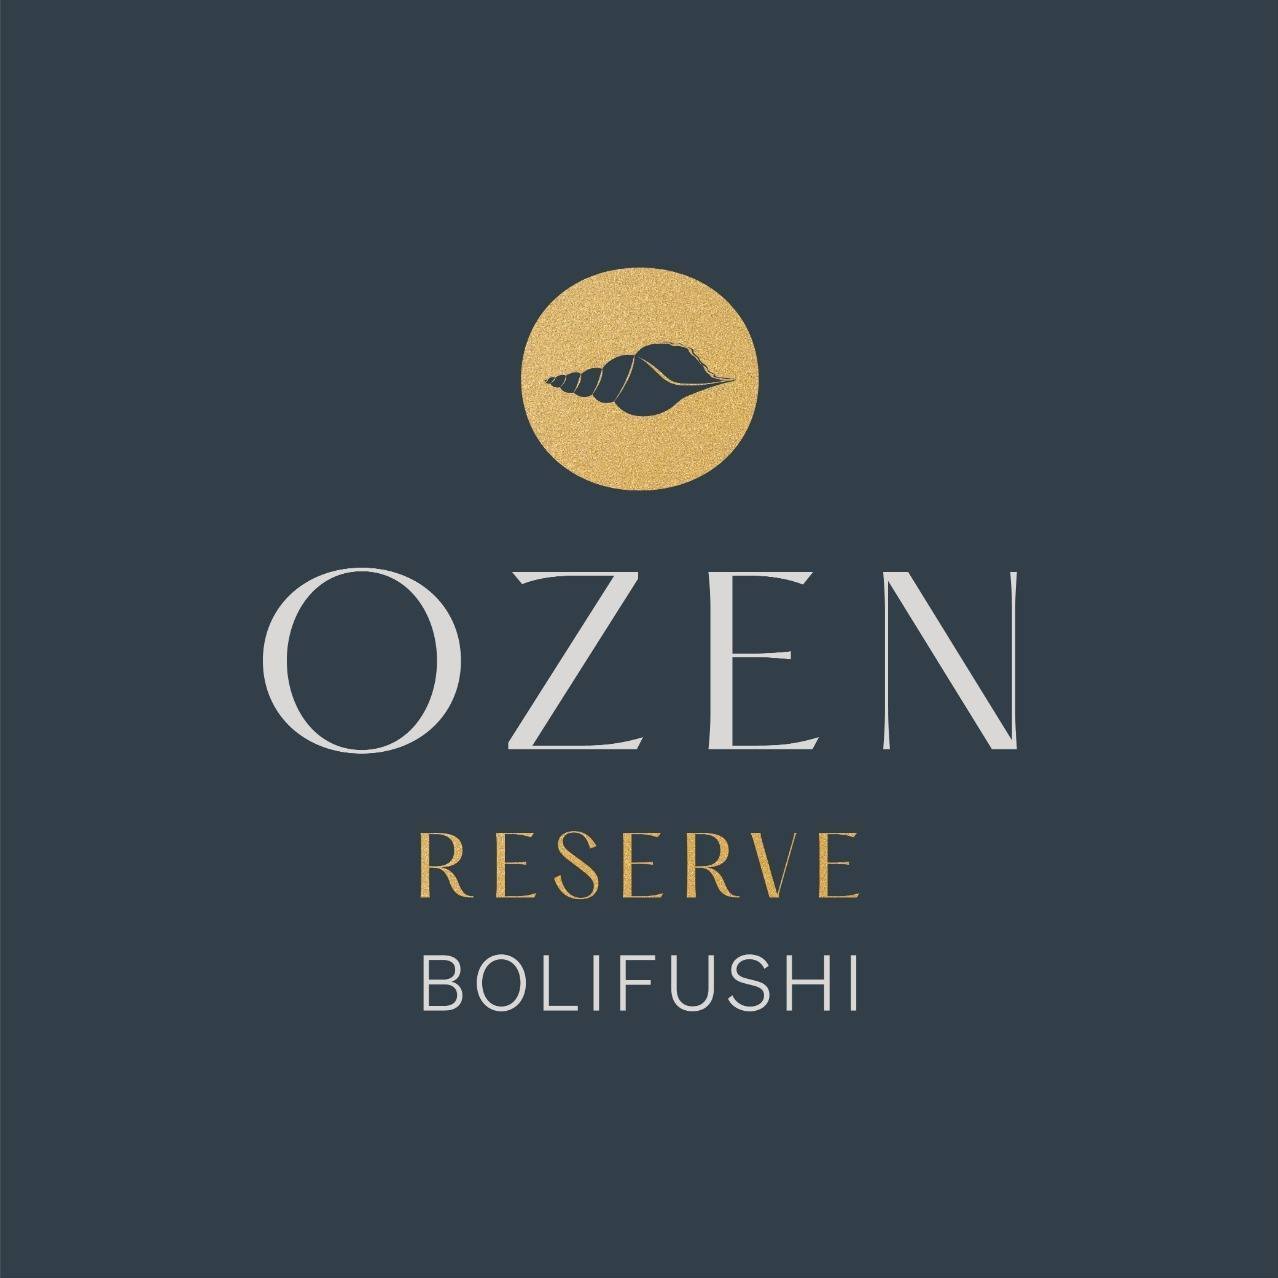 Ozen Reserve Bolifushi